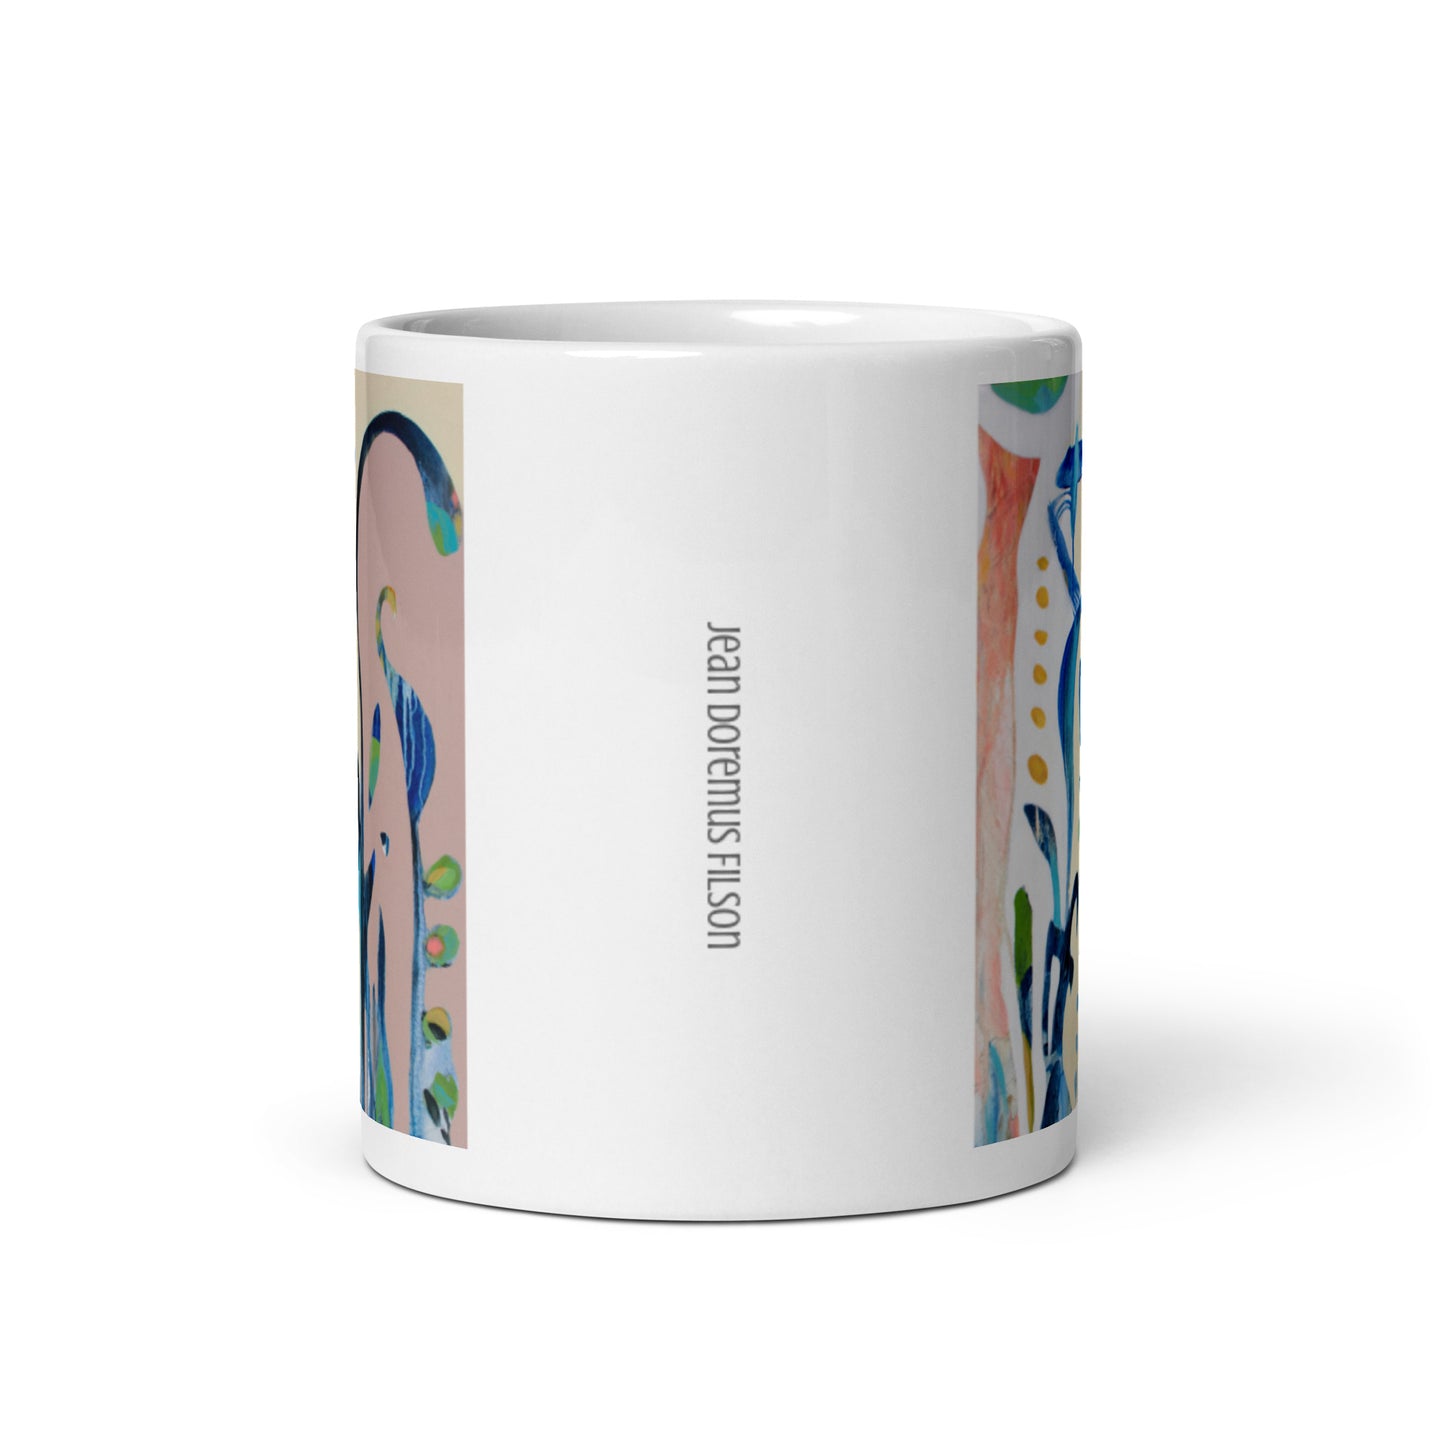 Dove, White glossy mug